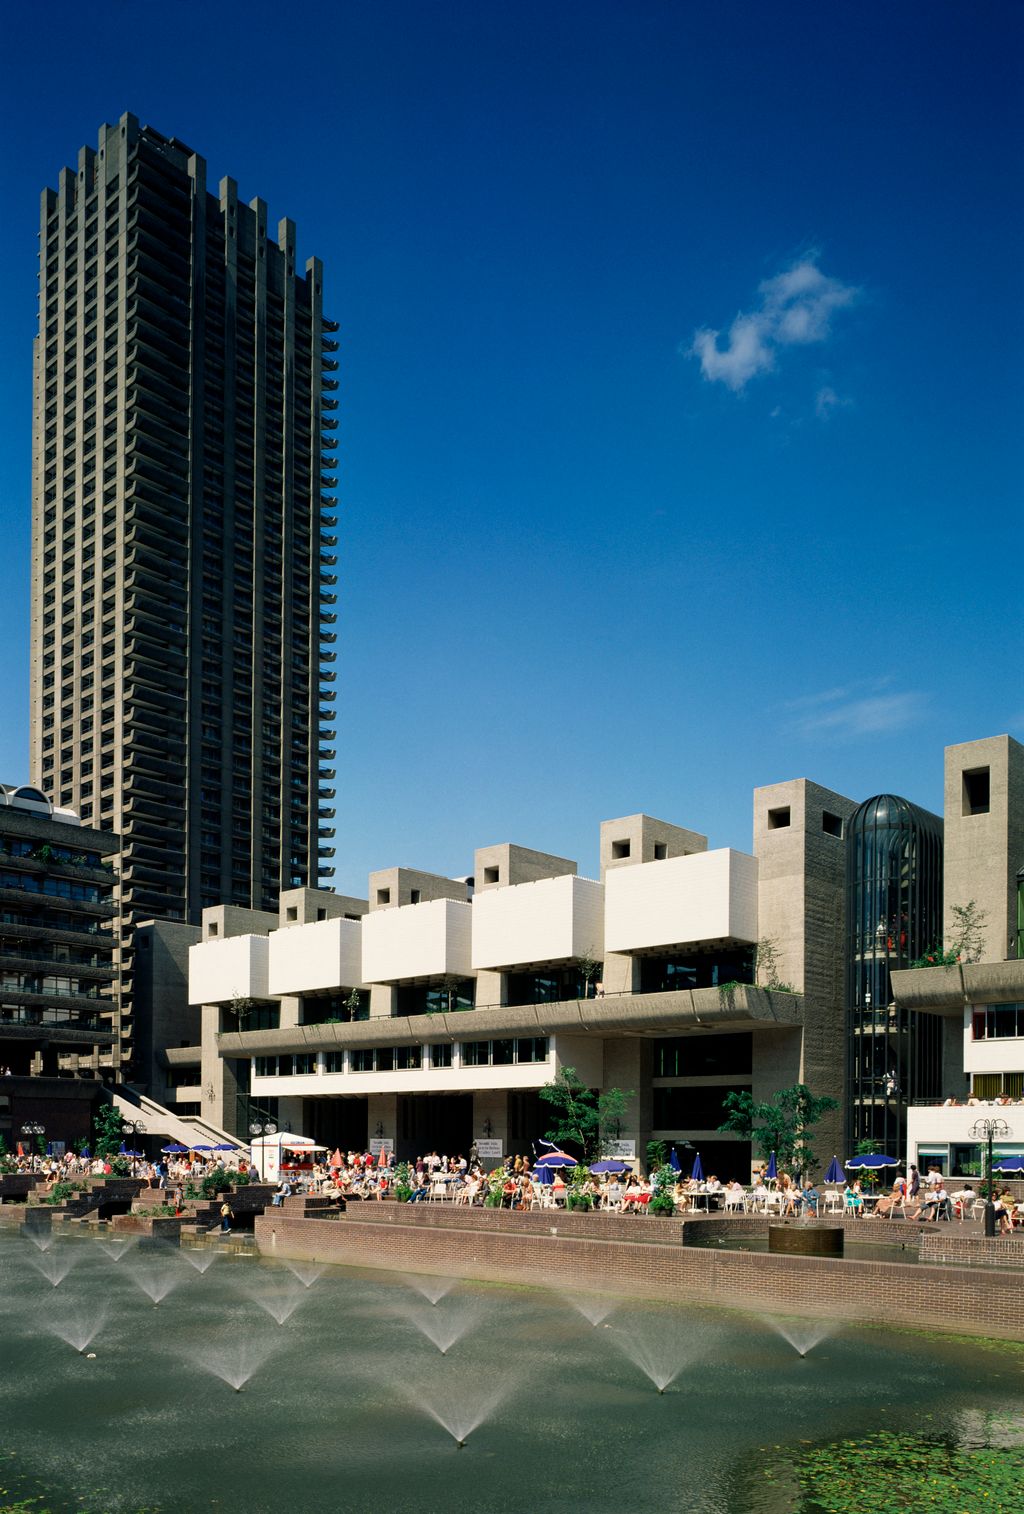 The Barbican Centre, London, brutalista építészet a világ körül galéria 